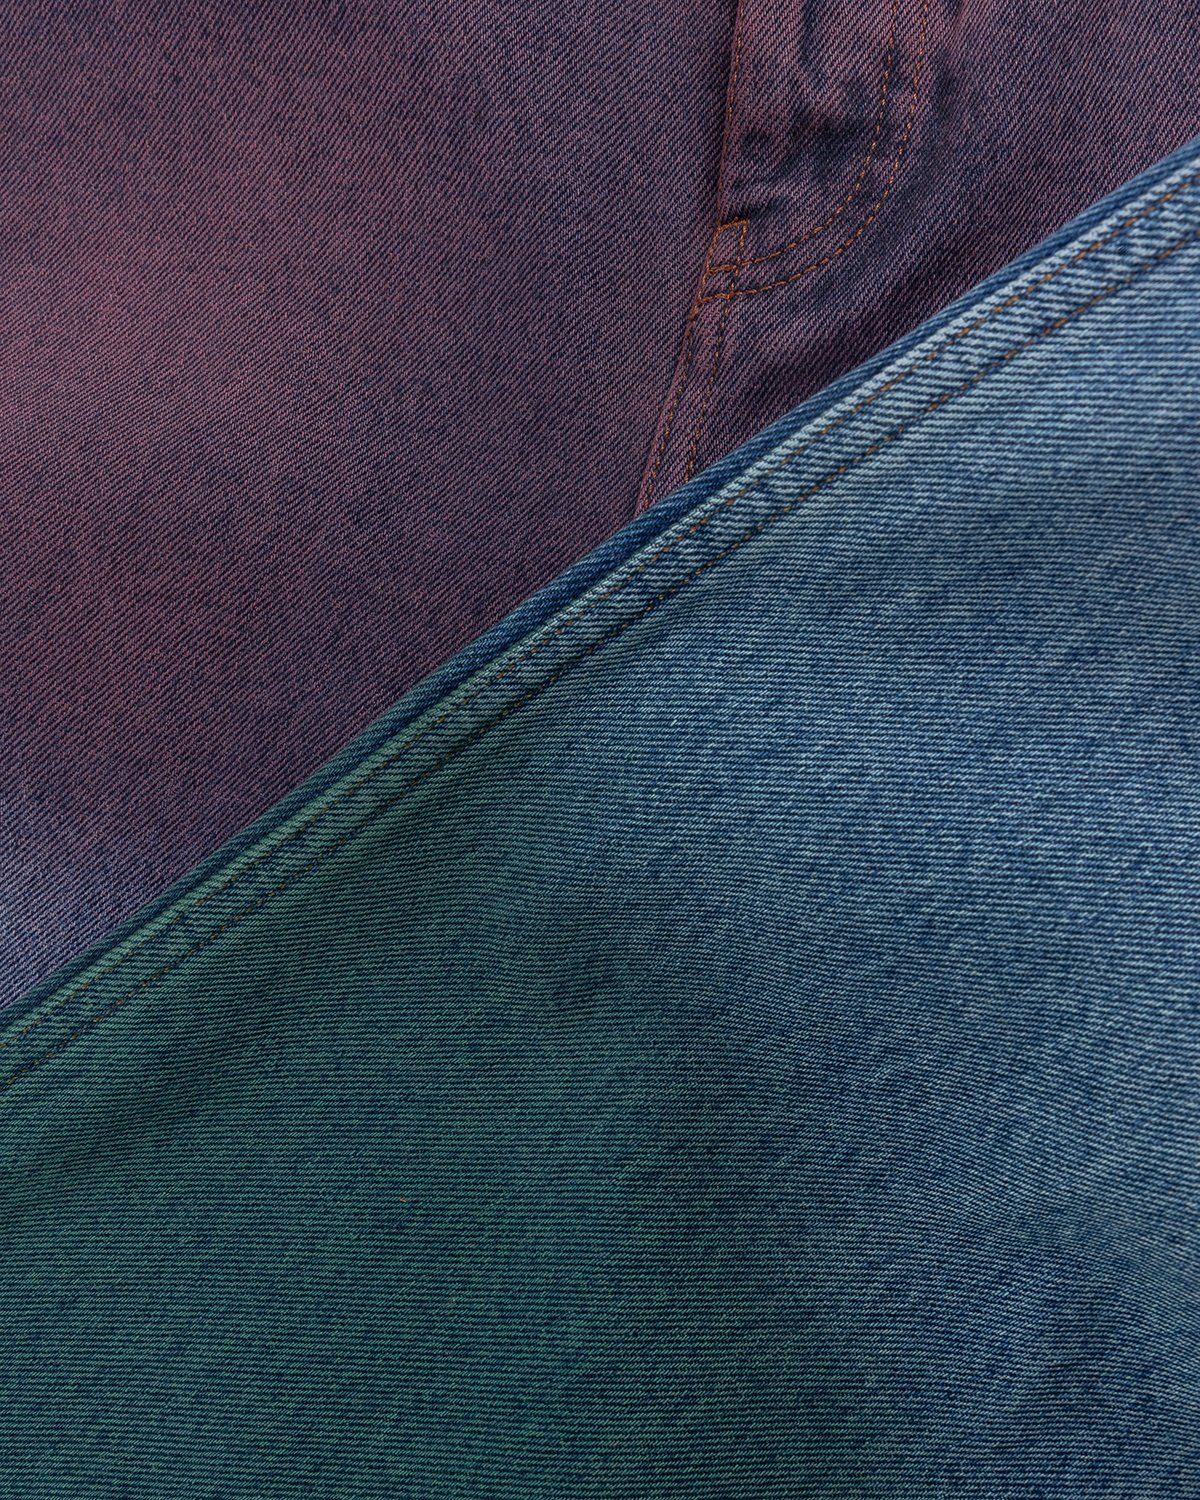 Loewe – Paula's Ibiza Tricolor Denim Trousers Red/Blue/Green - Pants - Blue - Image 5